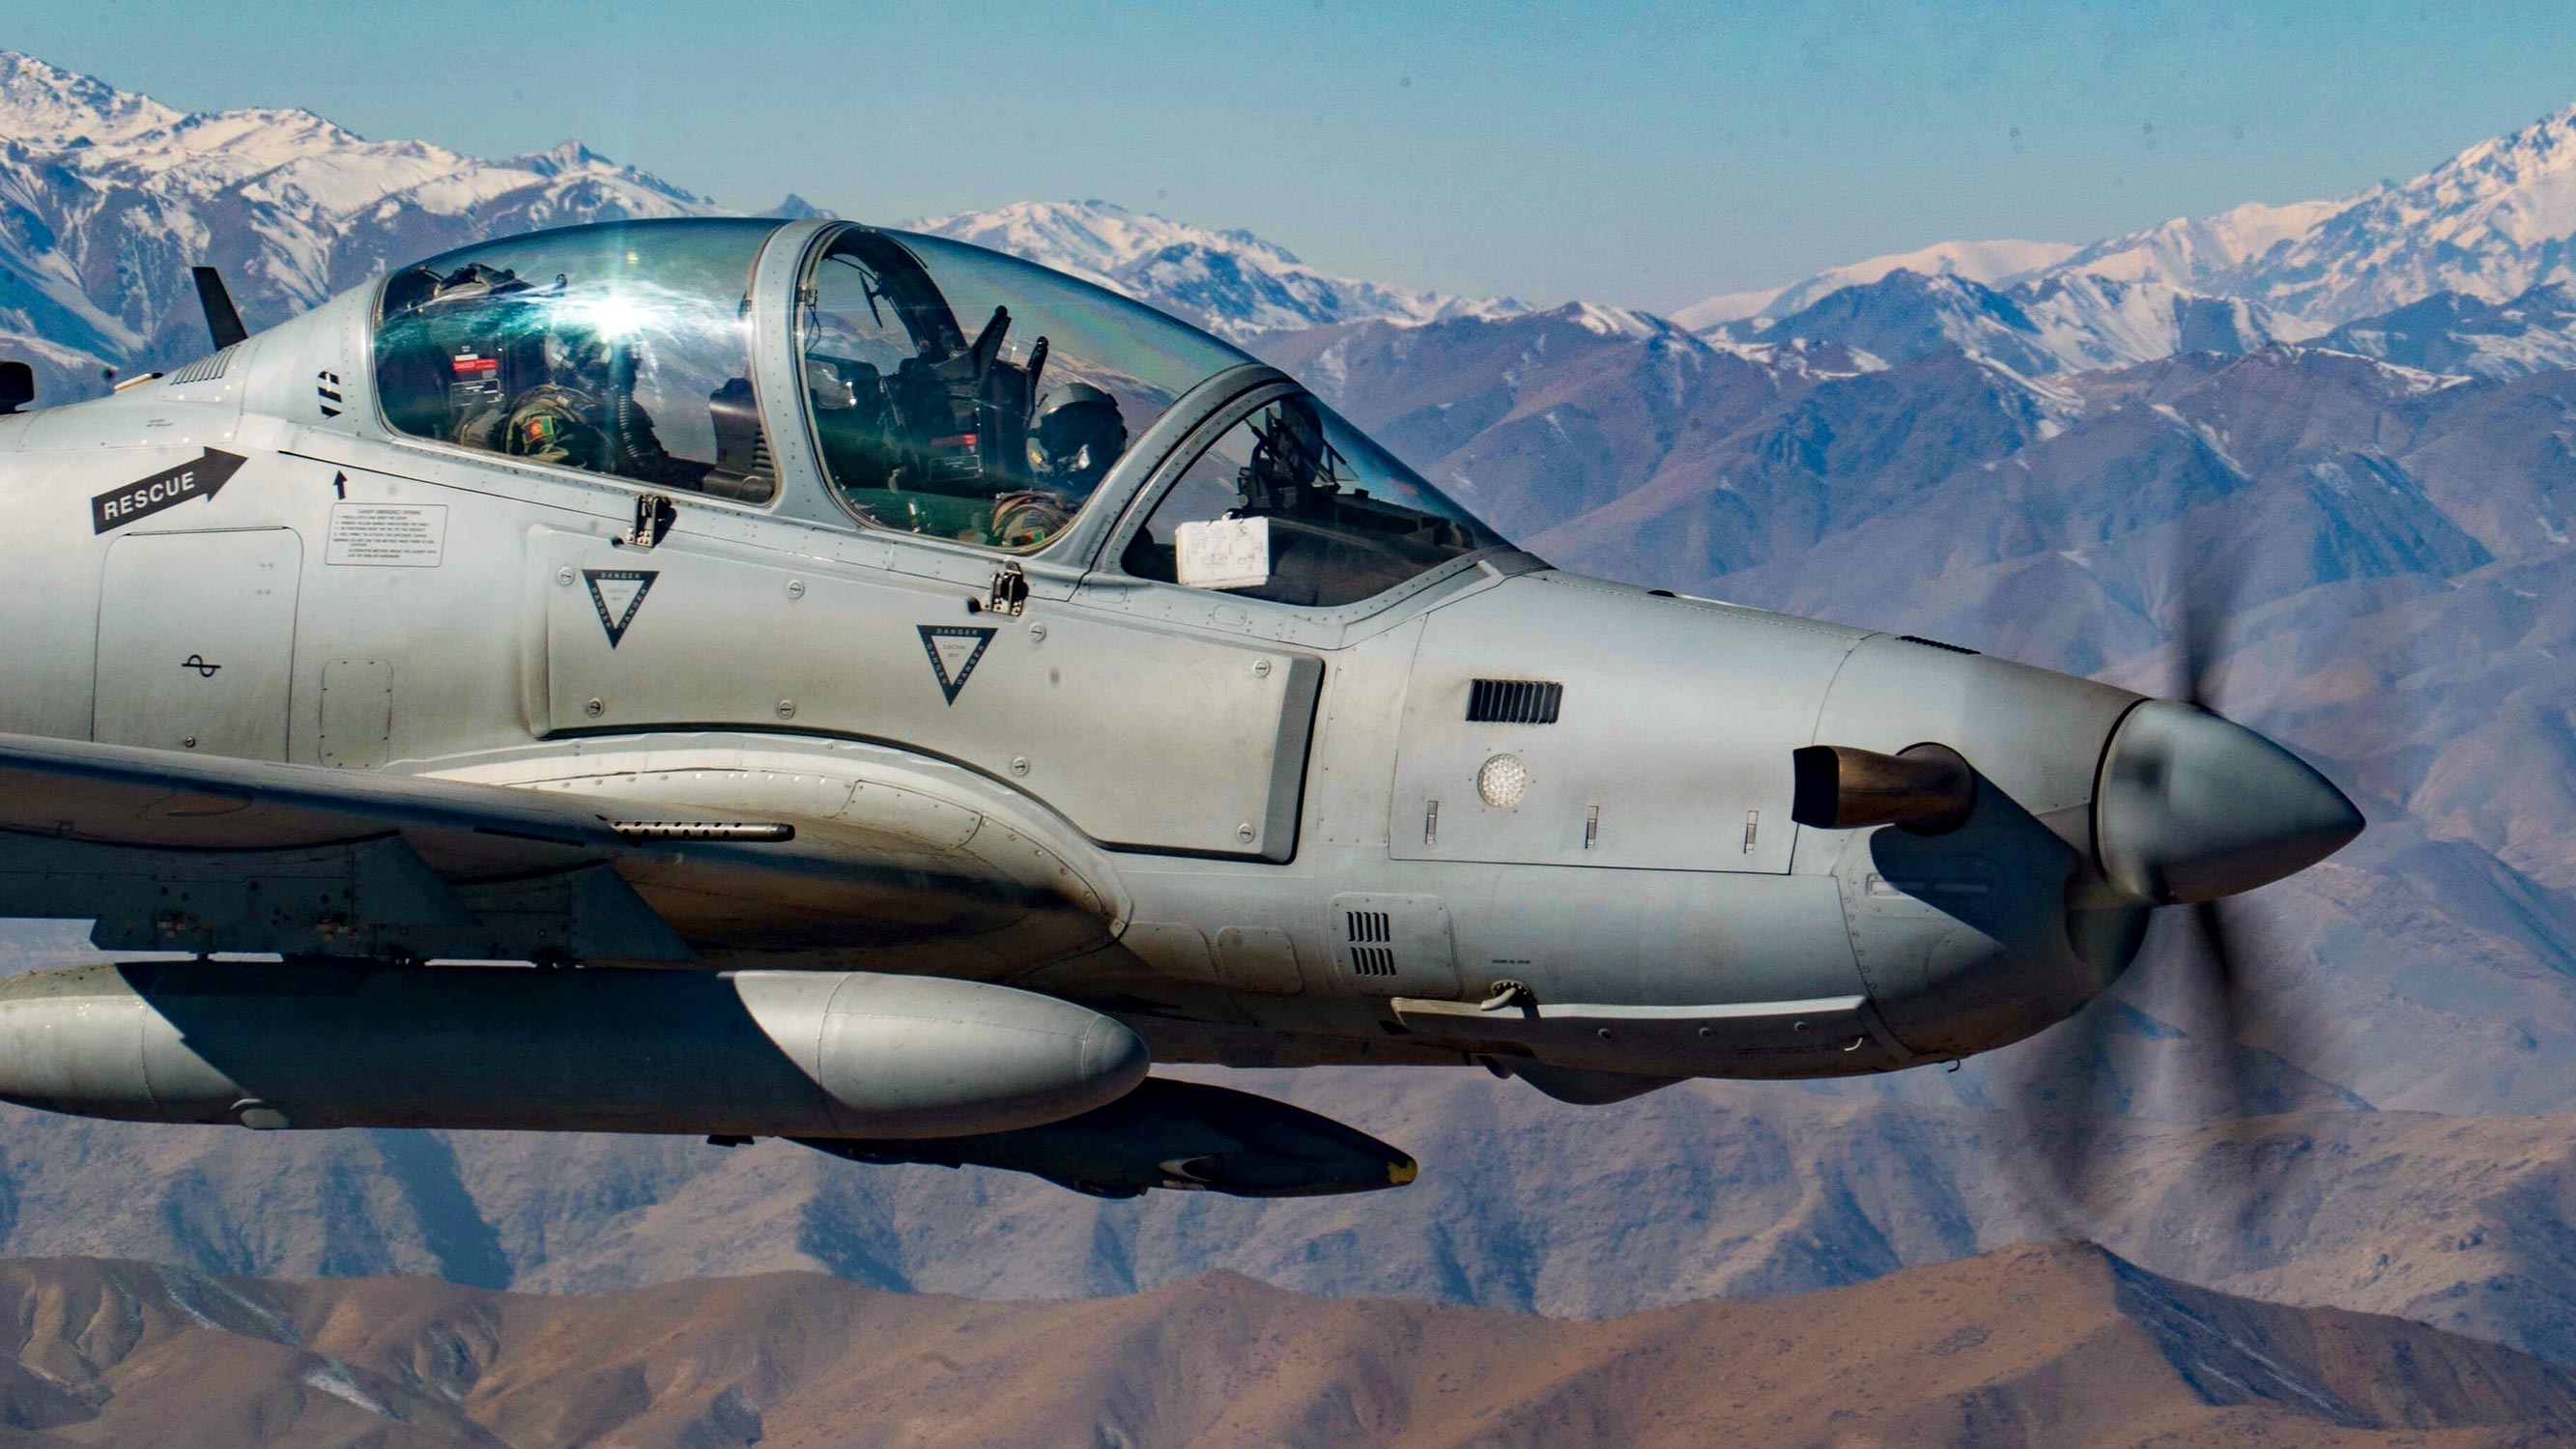 Afghan Air Force A-29 Training